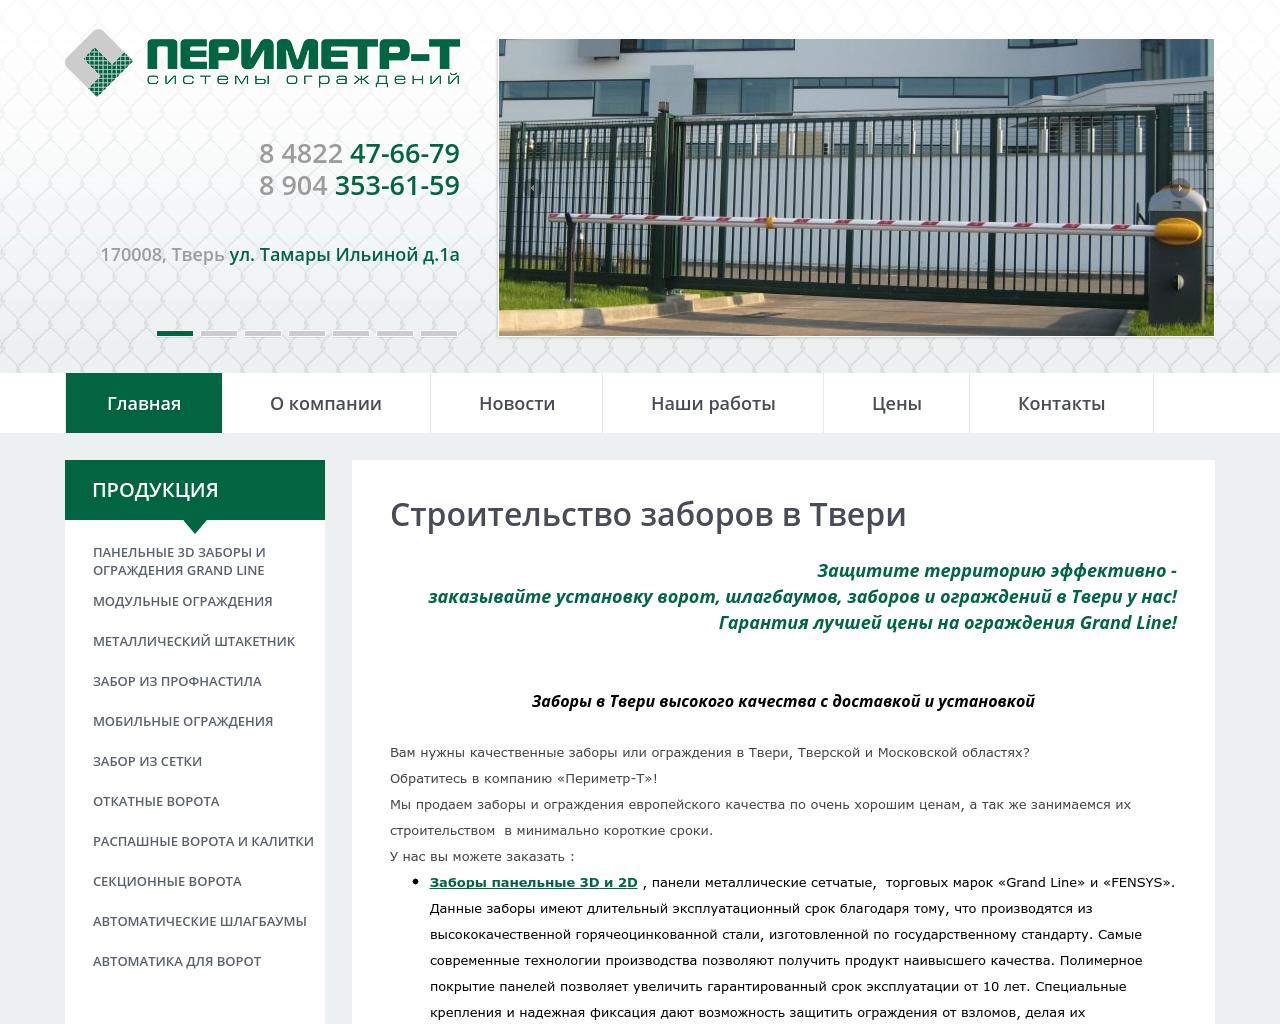 Изображение сайта perimetr-t.ru в разрешении 1280x1024